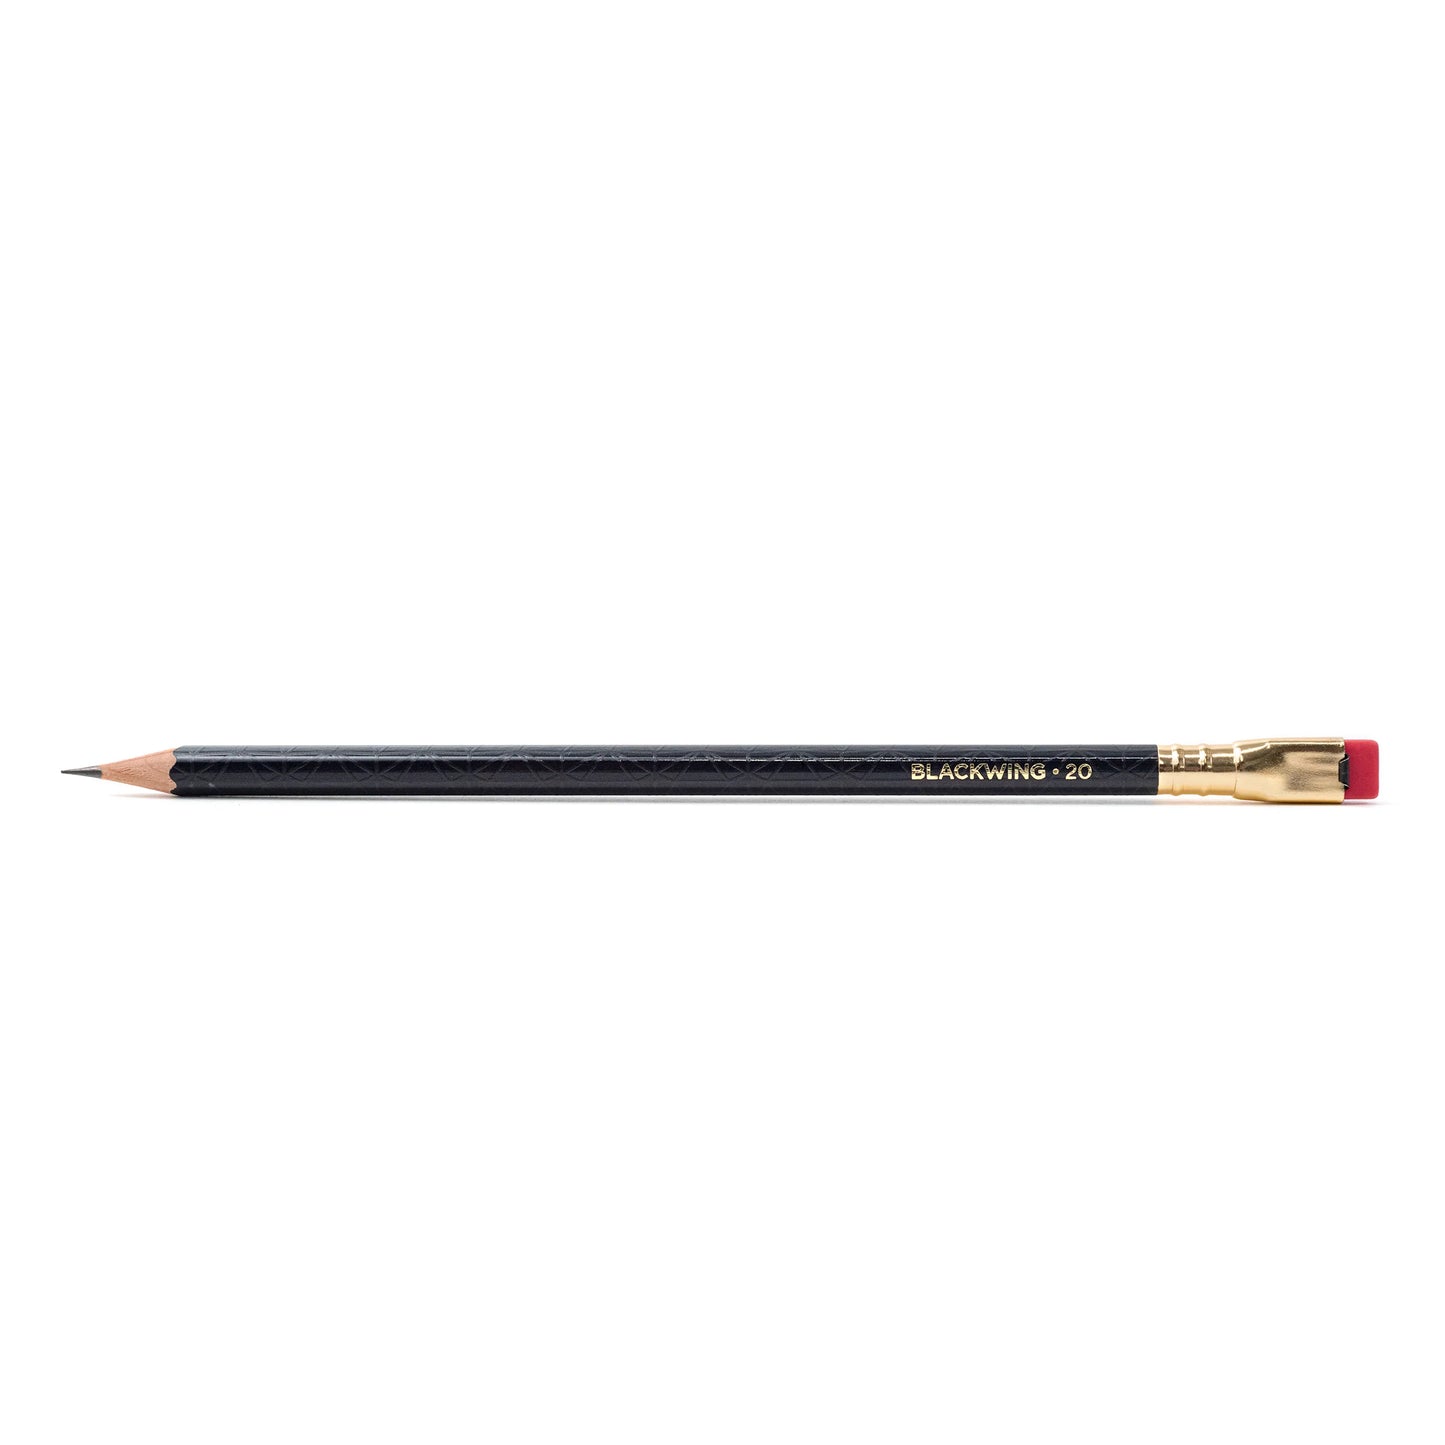 Blackwing Tabletop Games "Volume 20" Pencils